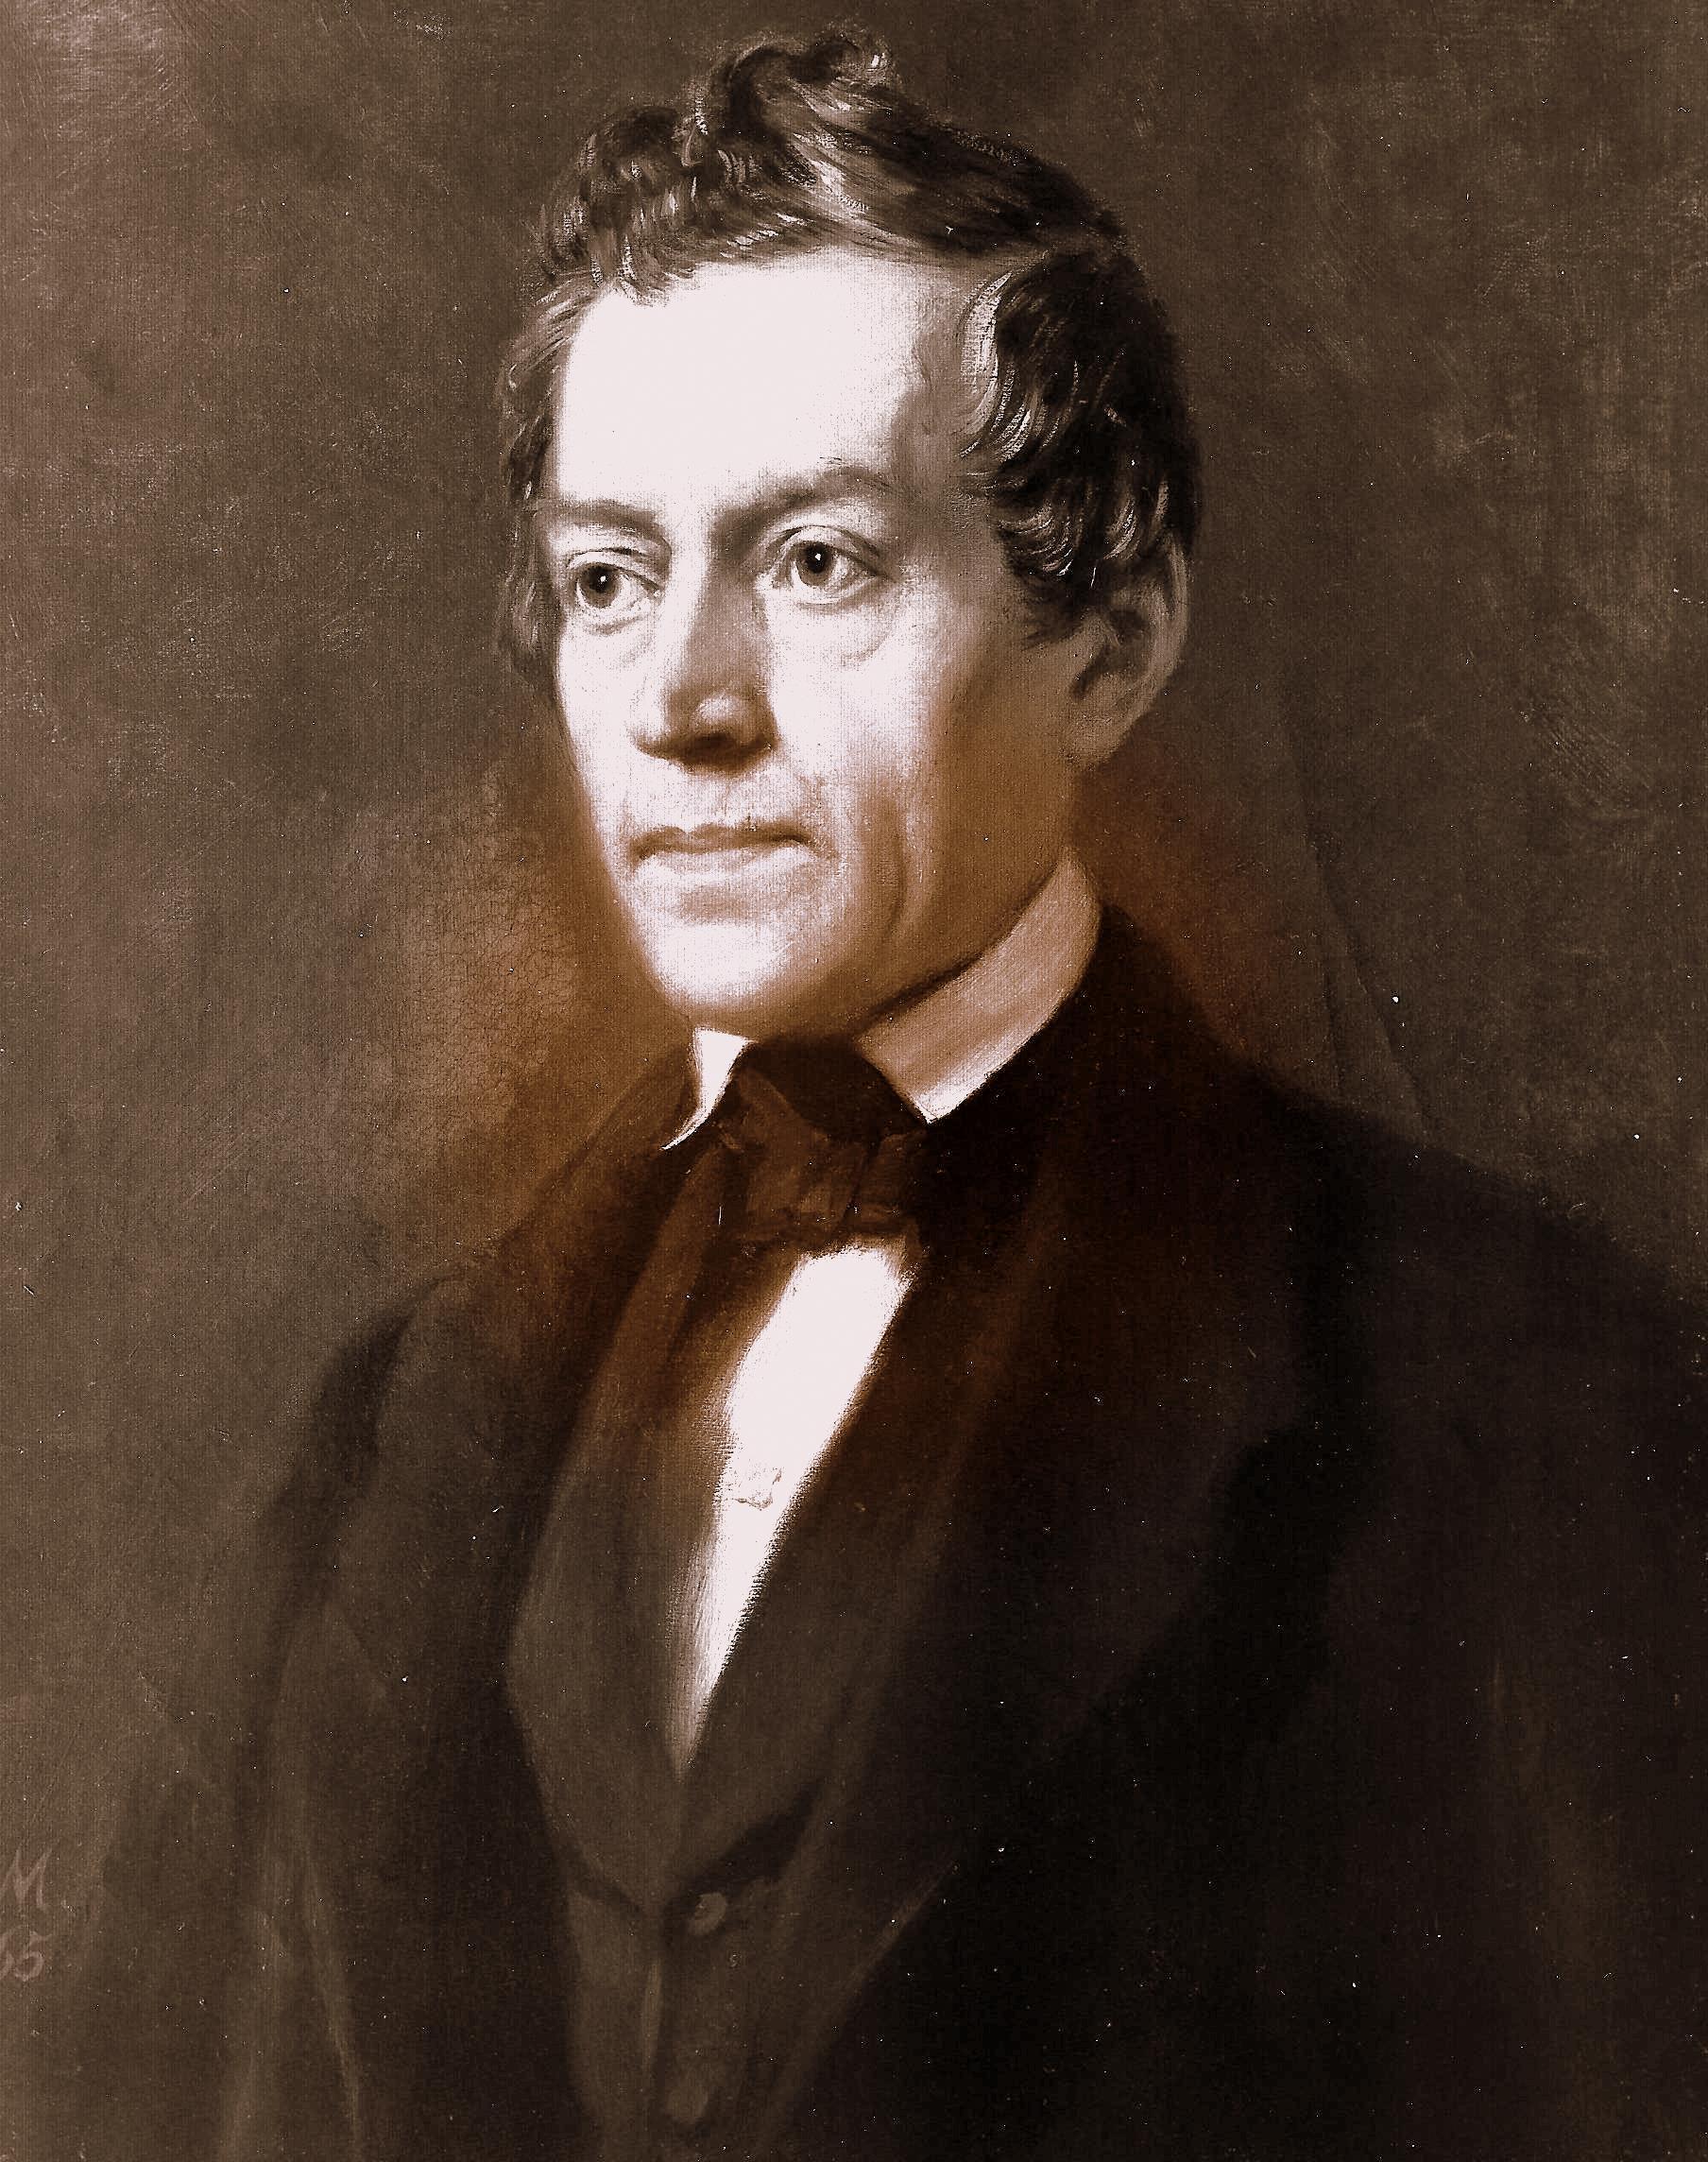 David Friedrich Strauss